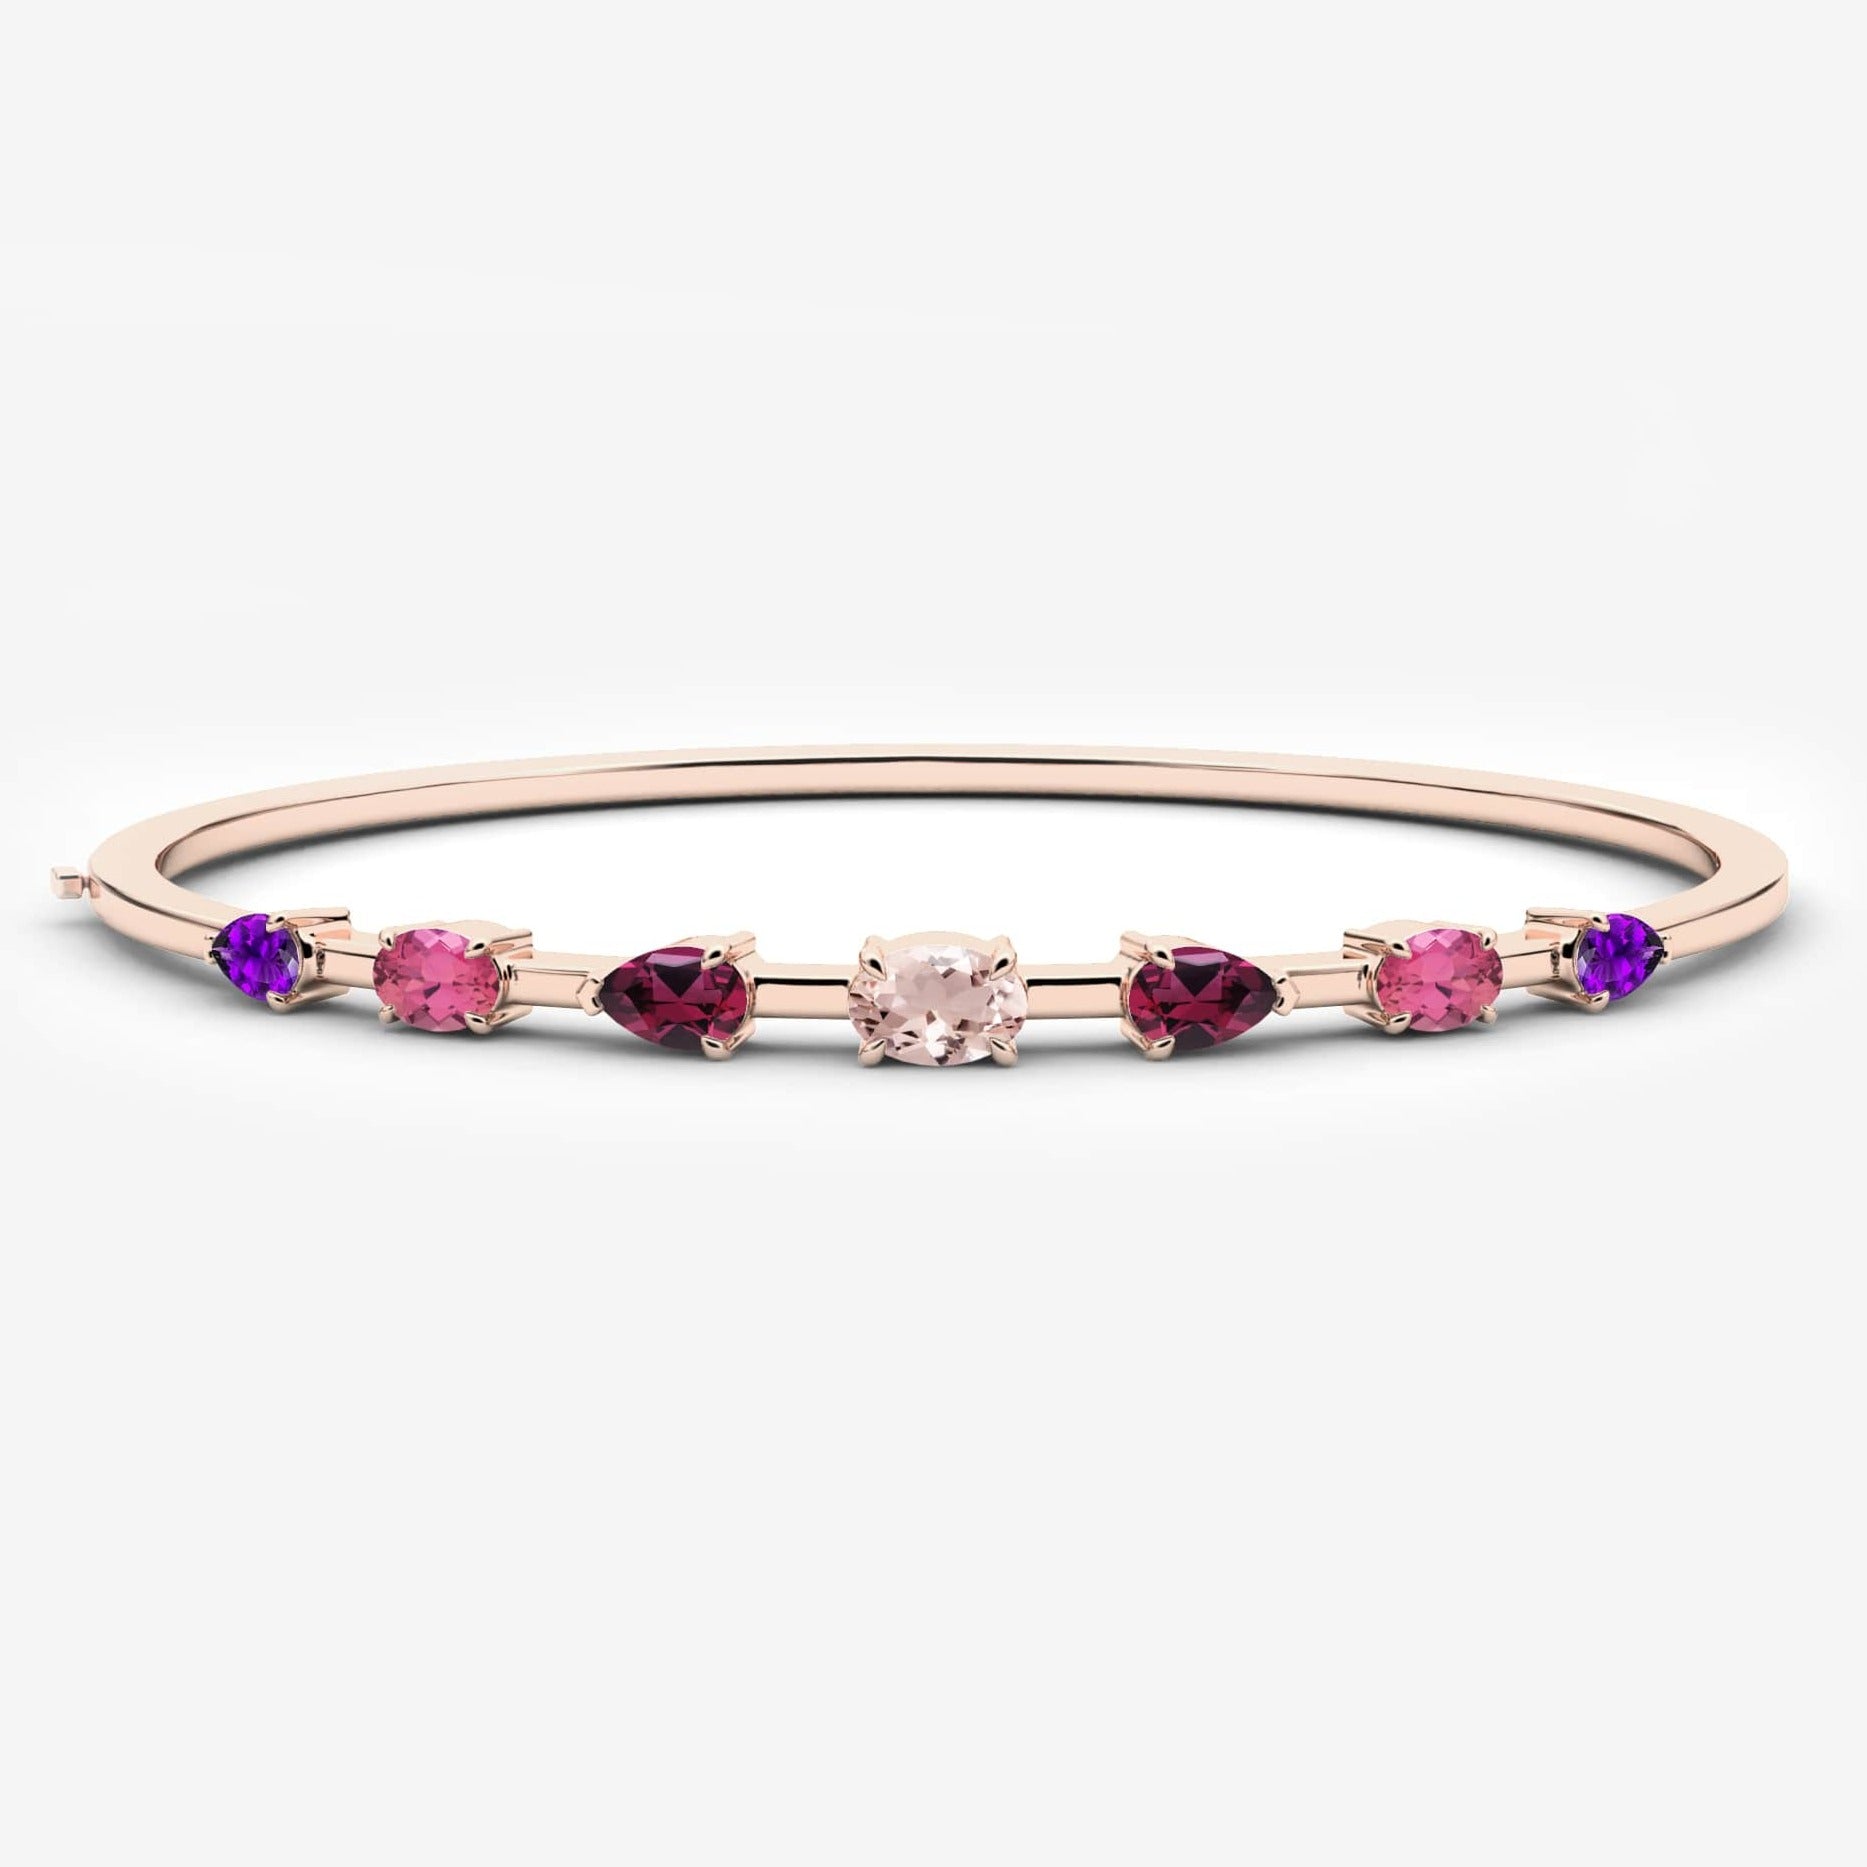 Rose gold gemstone bangle bracelet